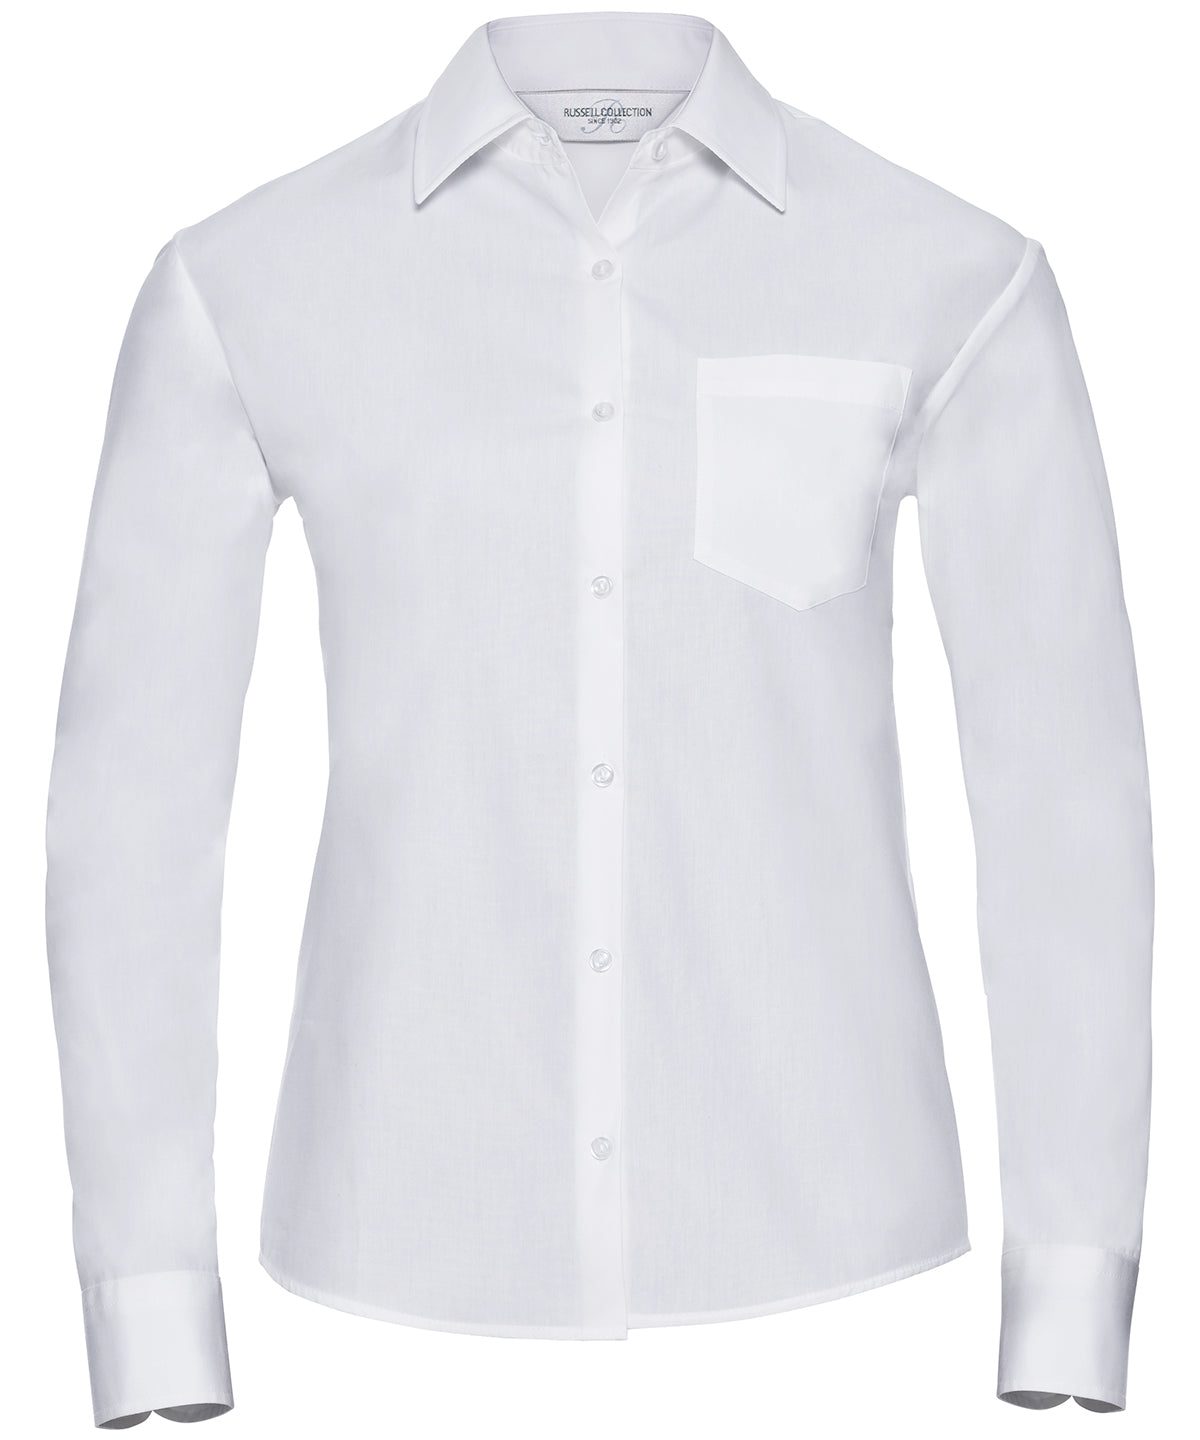 Bolir - Women's Long Sleeve 100% Cotton Poplin Shirt